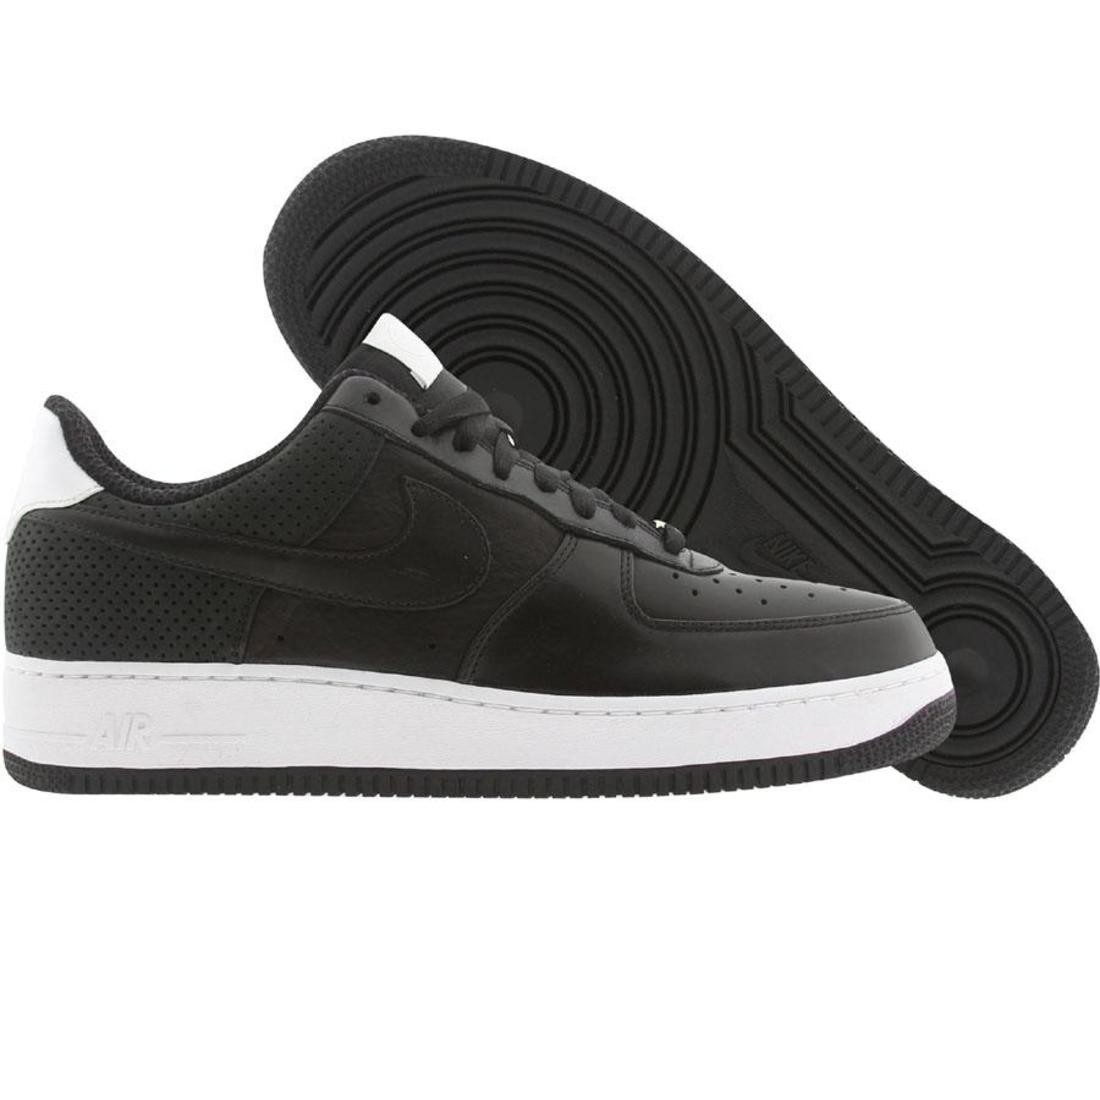 Nike Air Force 1 07 Premium Low Tier 0 Hiroshi Fujiwara Edition (black / black / white)